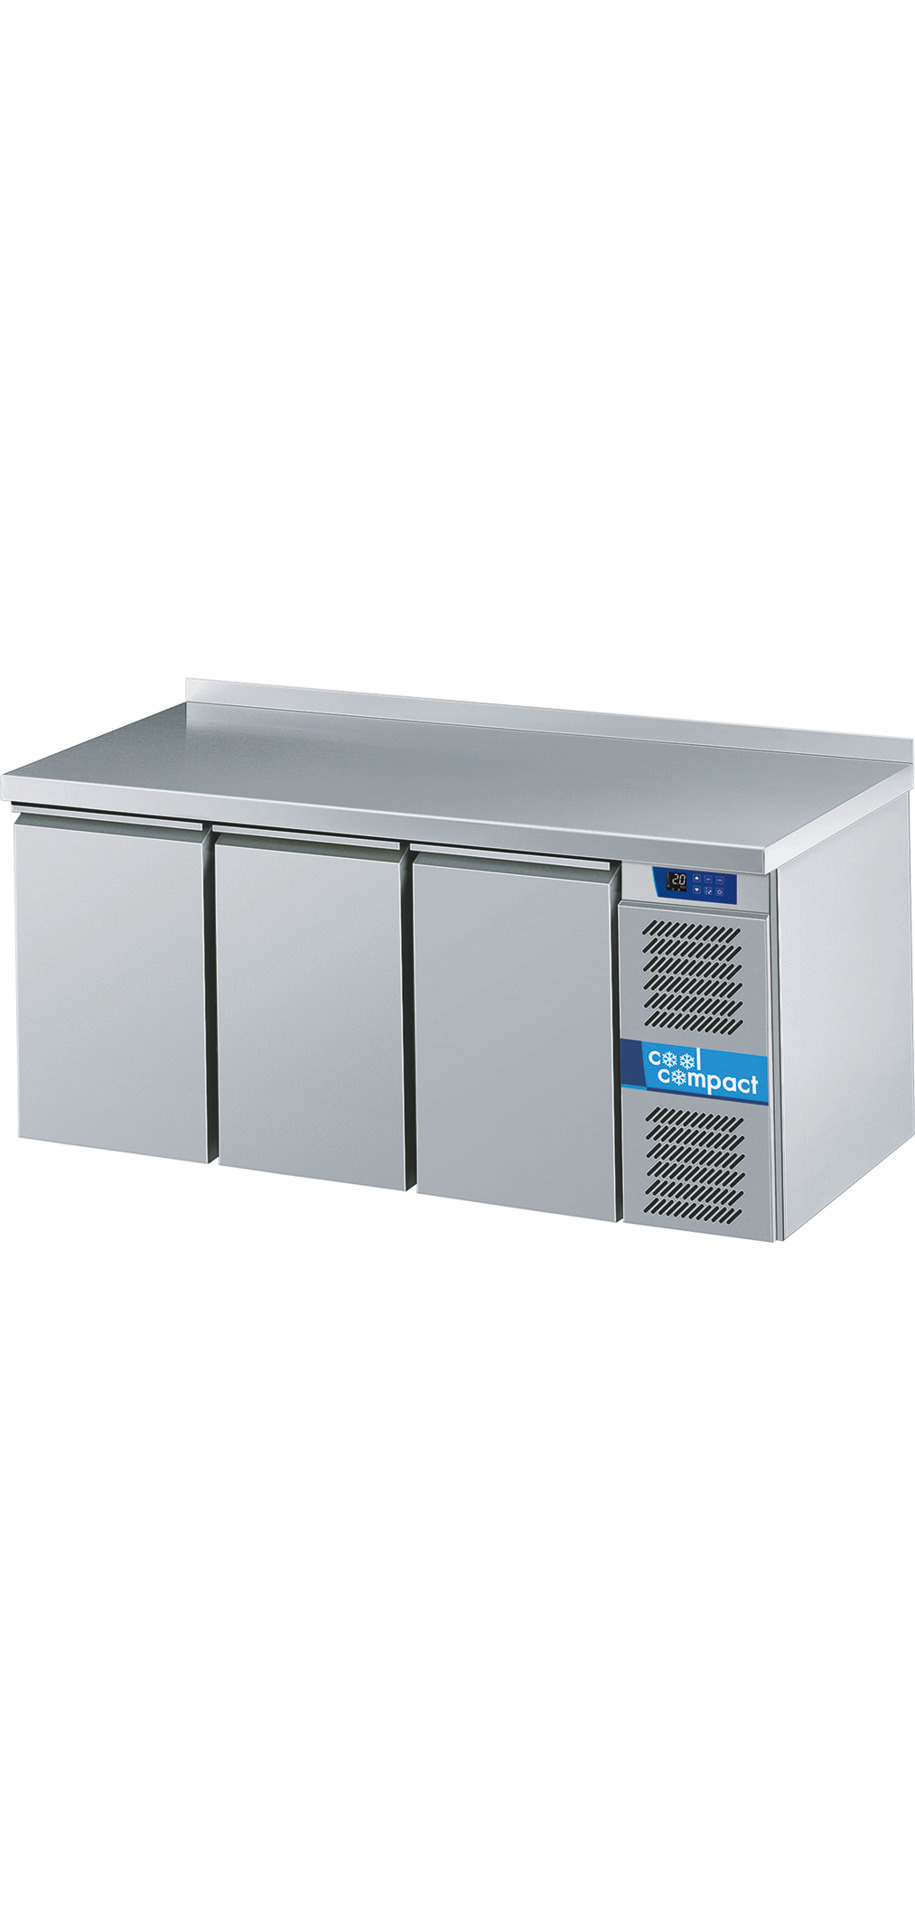 Tiefkühltisch 3 Türen je 11 x GN 1/1 / ohne Tischplatte / zentralgekühlt